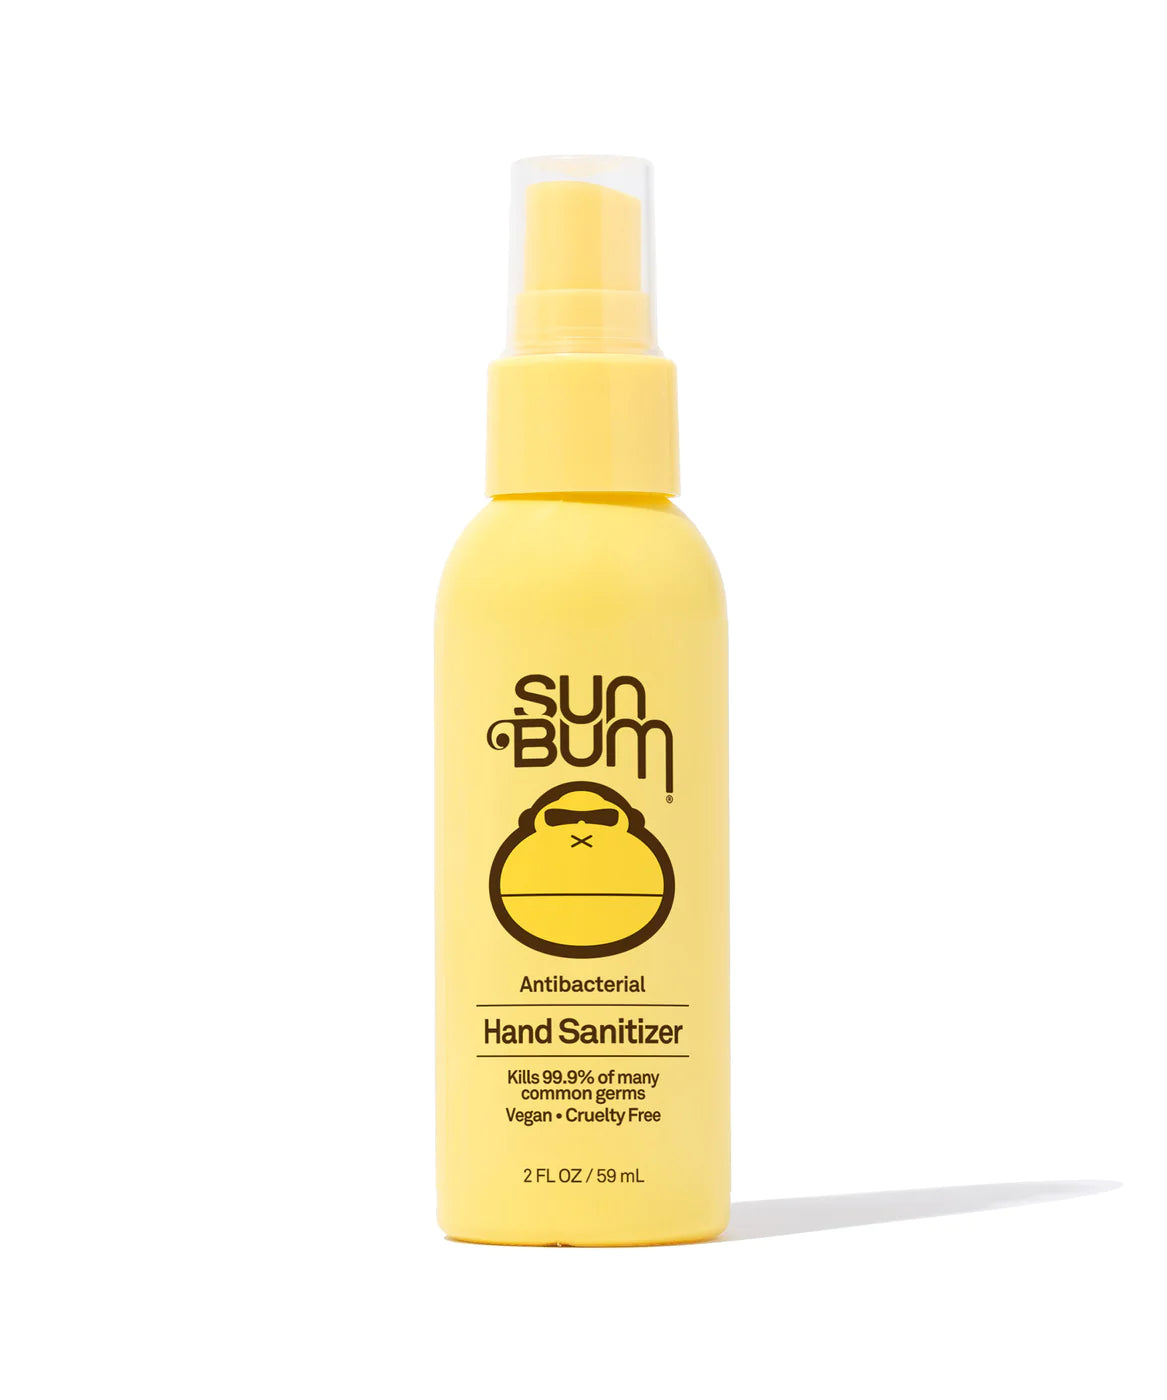 SUN BUM - Hand Sanitizer 59 ml